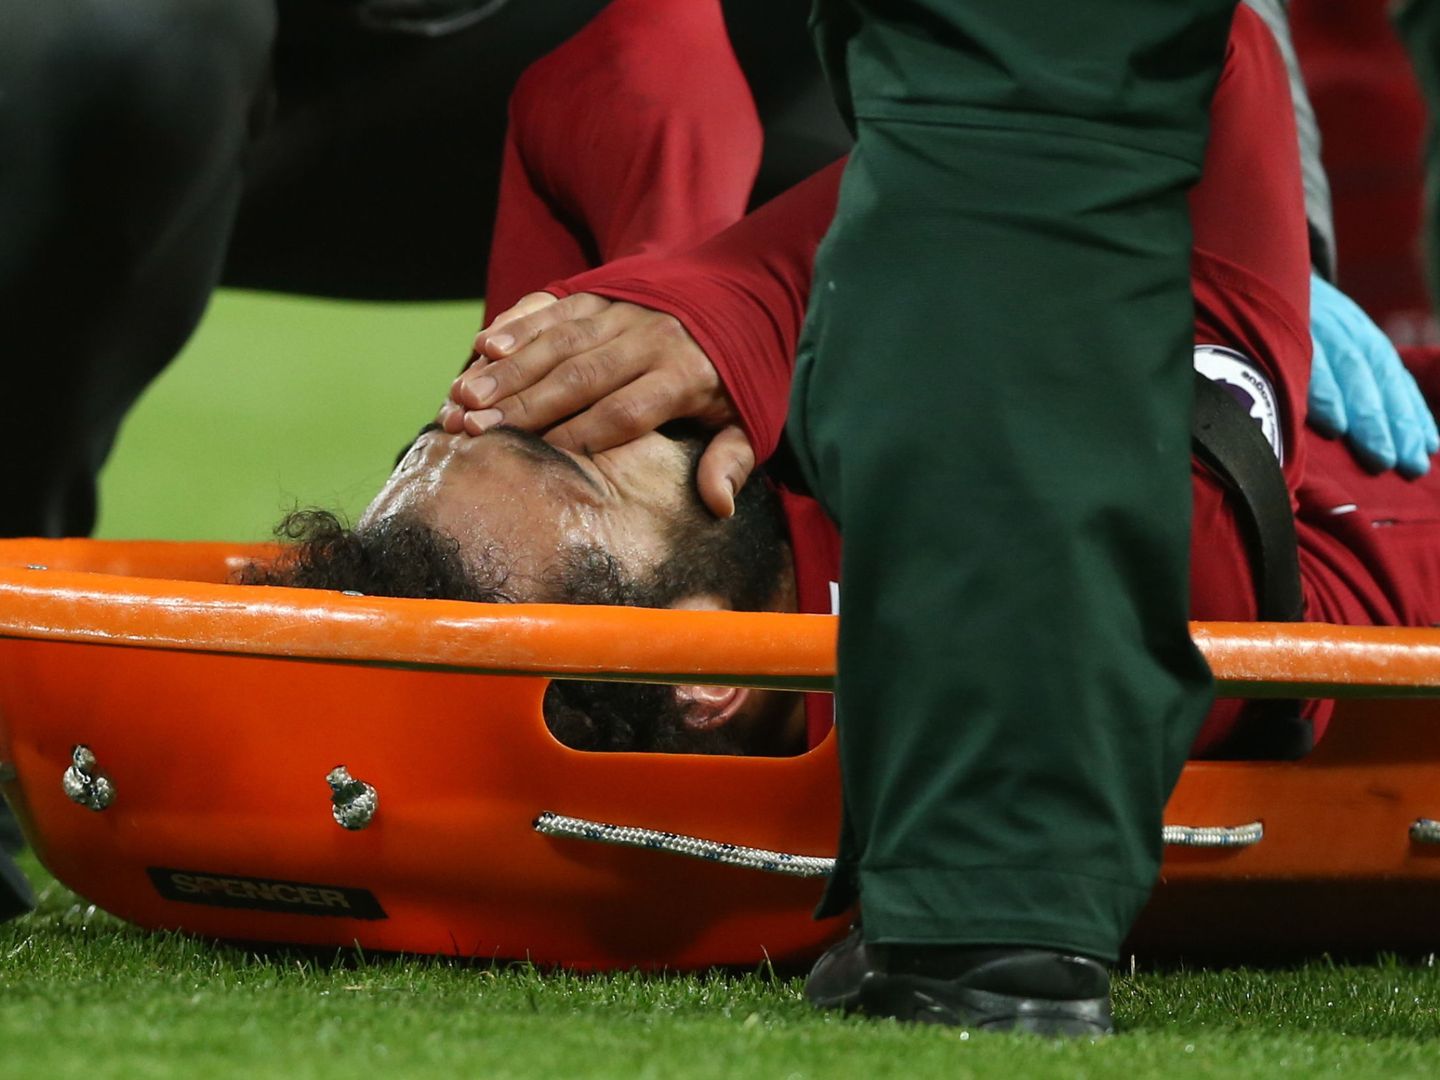 Salah rompe a llorar antes de ser retirado en camilla este sábado. (EFE)